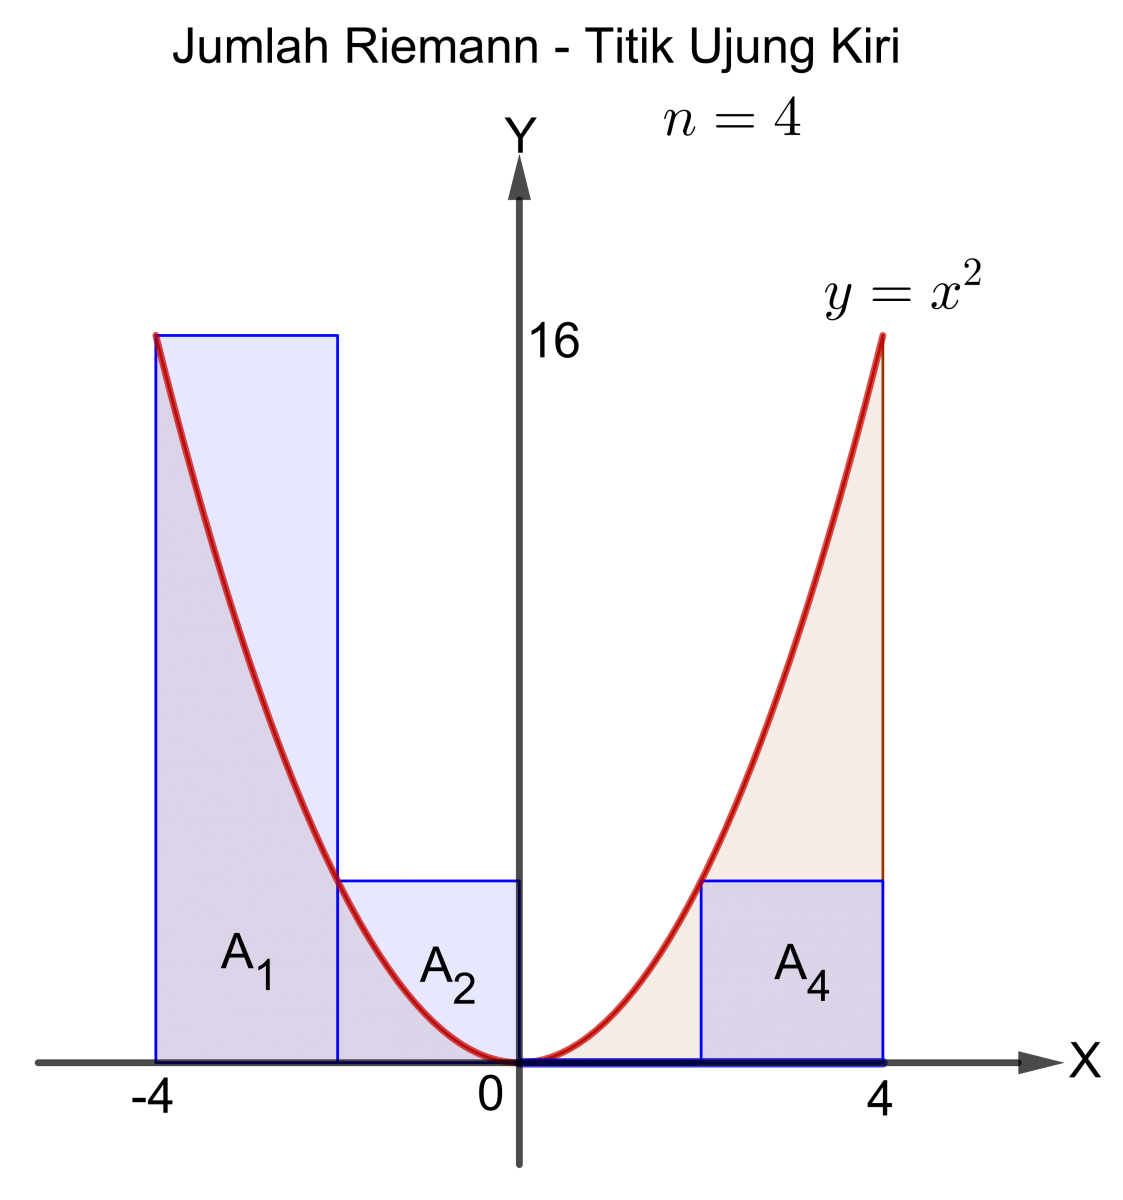 Jumlah Riemann - Titik Ujung Kiri (4 subselang)